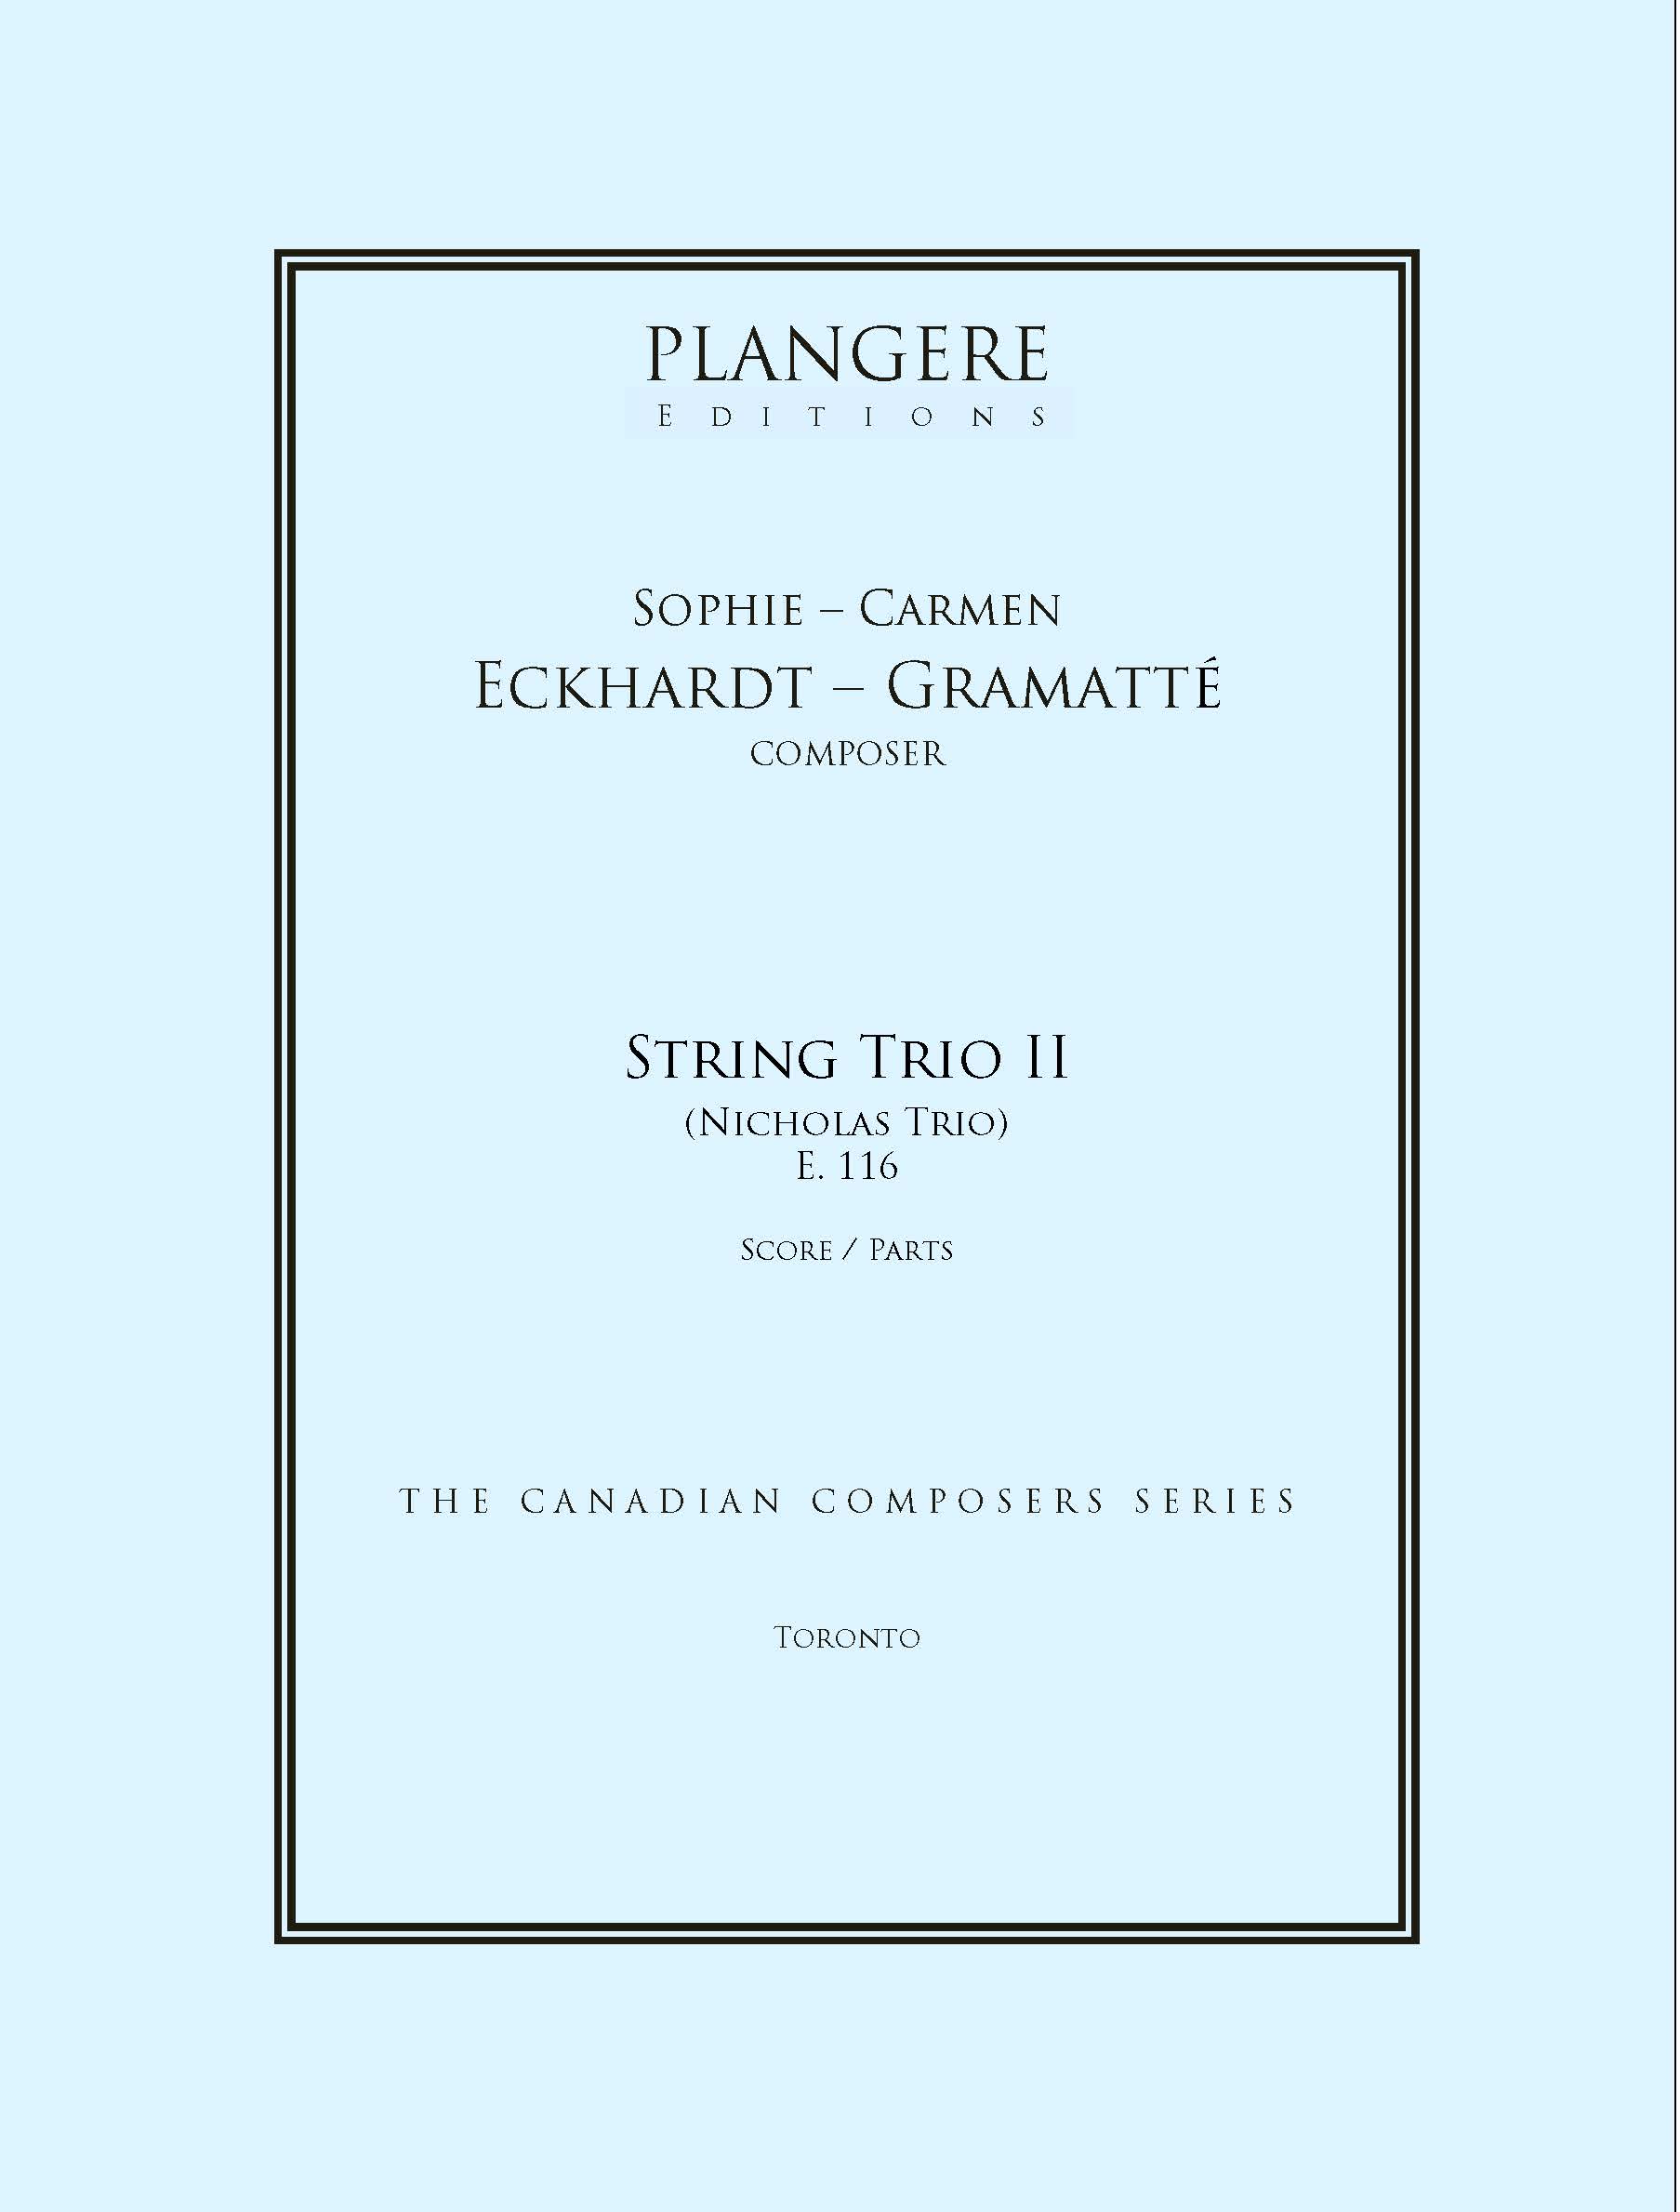 String Trio II (Nicholas Trio) E. 116 - Plangere Editions